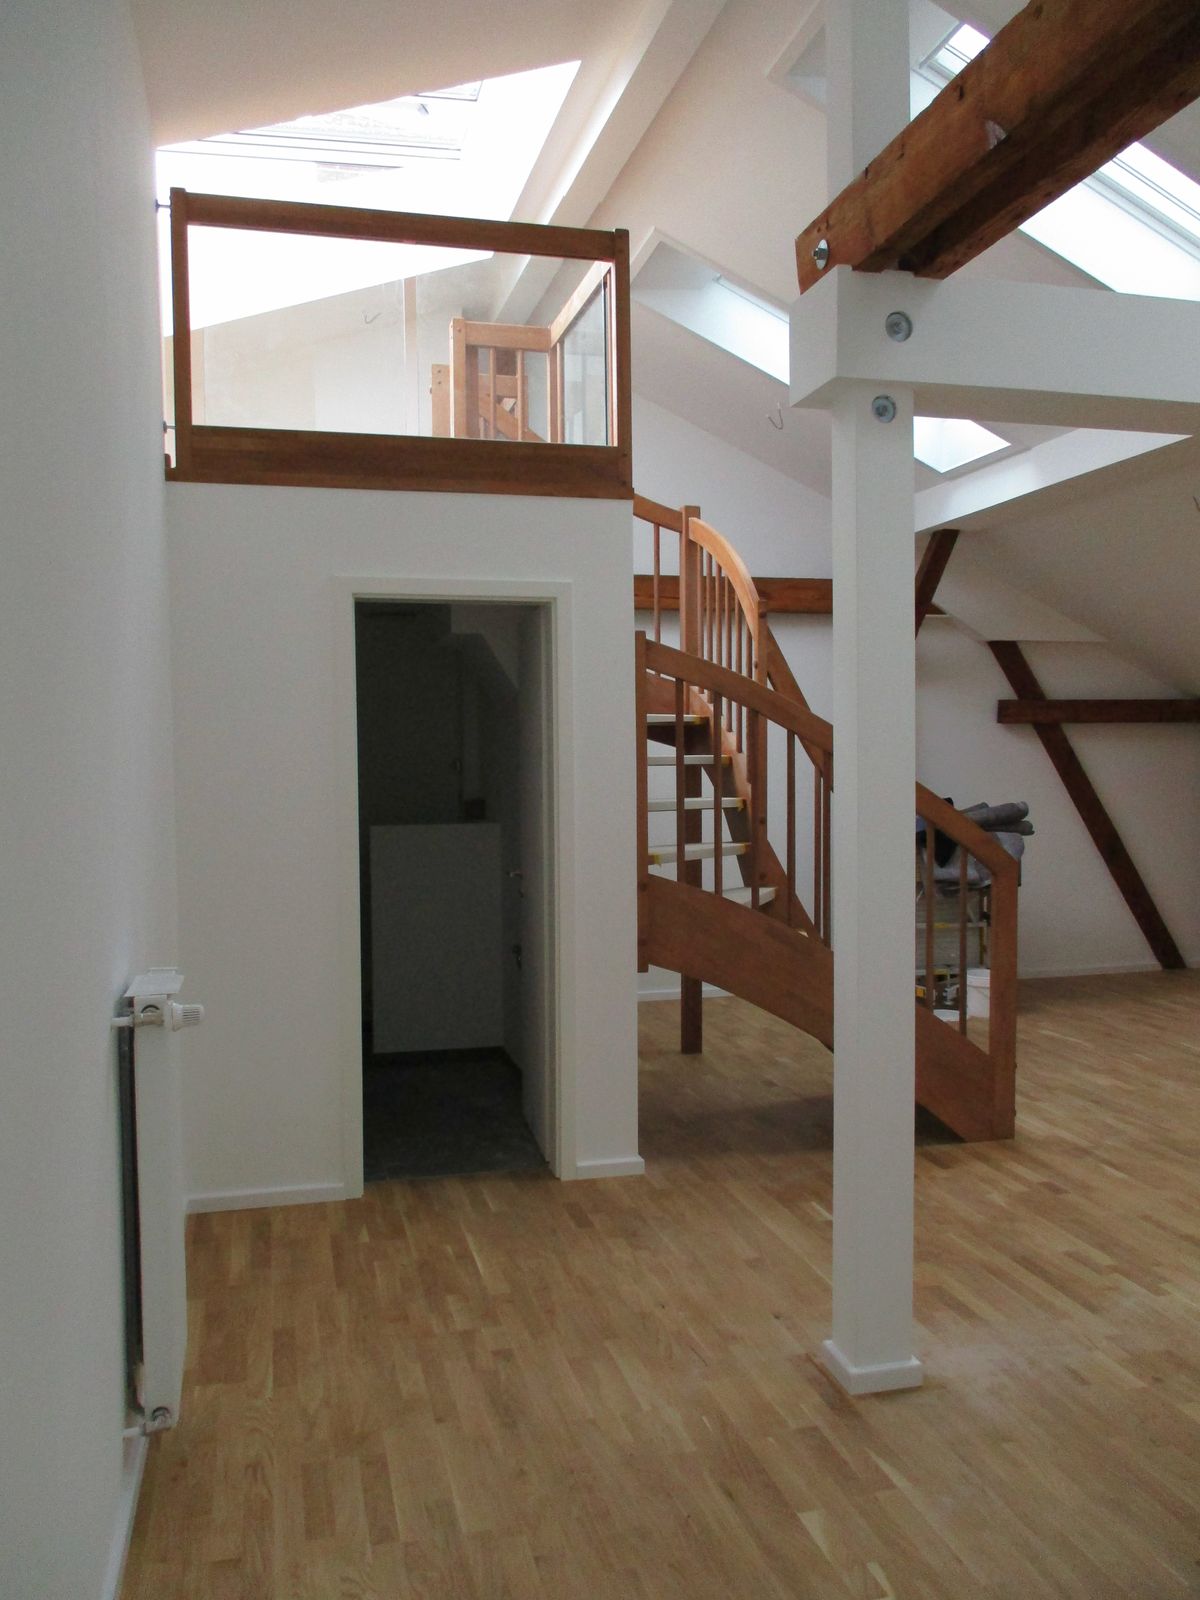 Wir bieten ebenfalls Dachgeschossausbau in Berlin - PRIeMA - Innenausbau